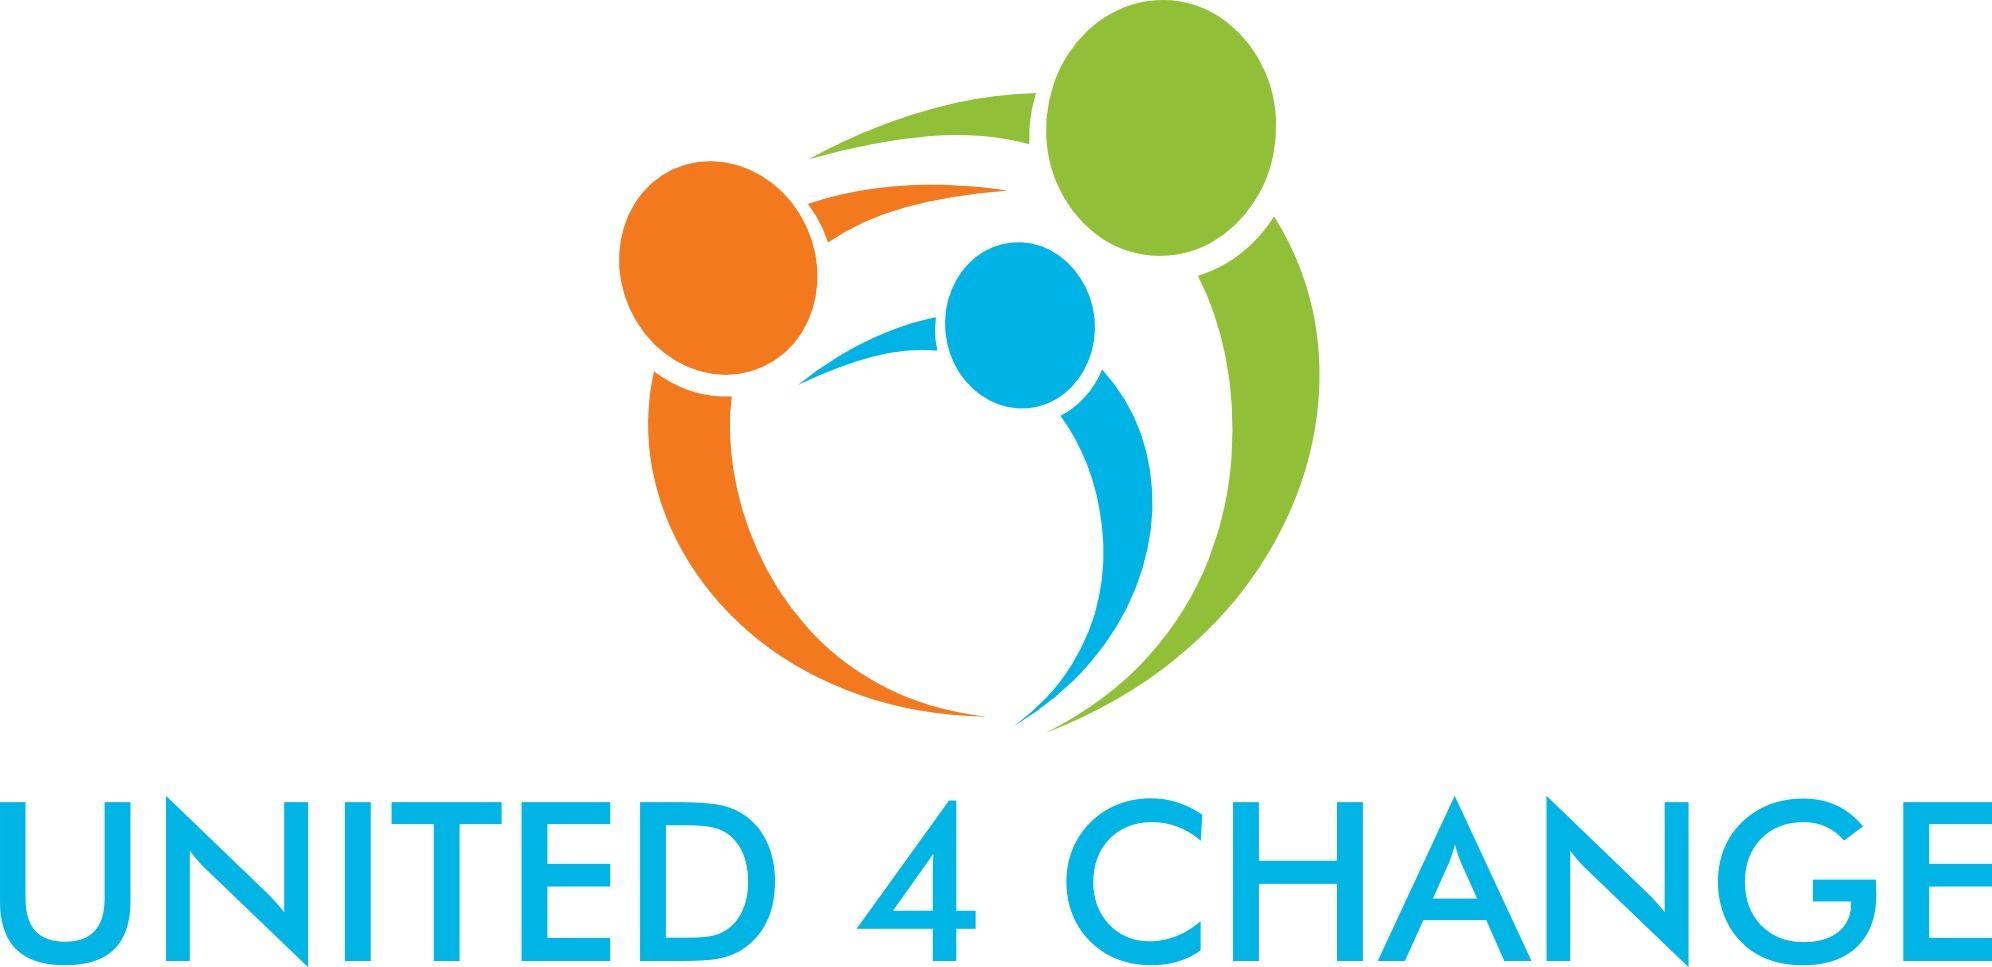 Google Change Logo - United 4 Change